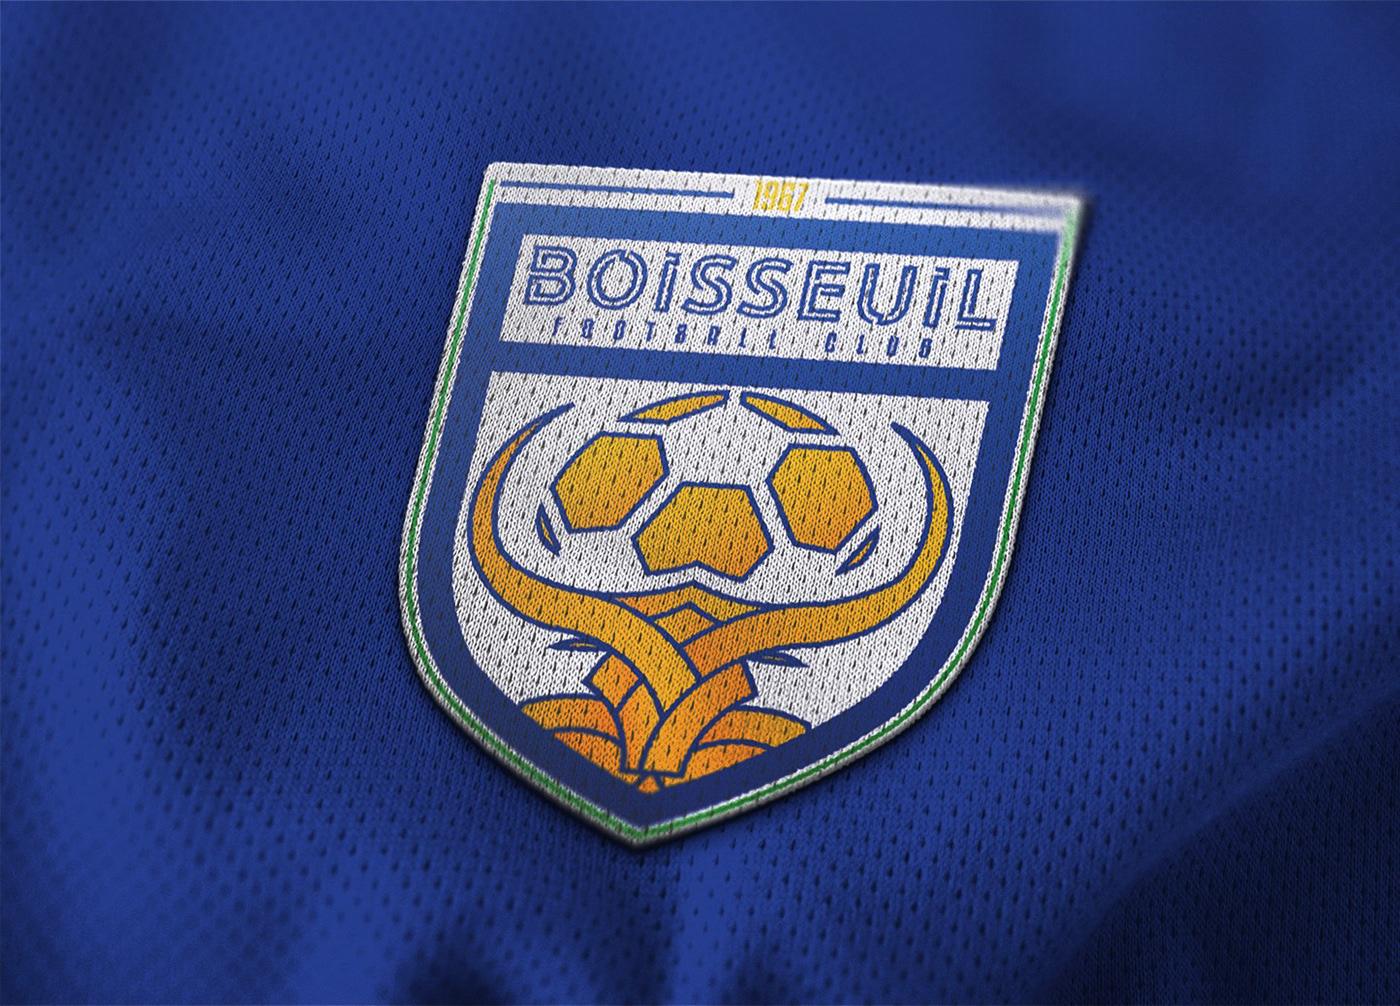 boisseuil communication Design Graphic football graphisme identidade visual jersey kit logo Nike